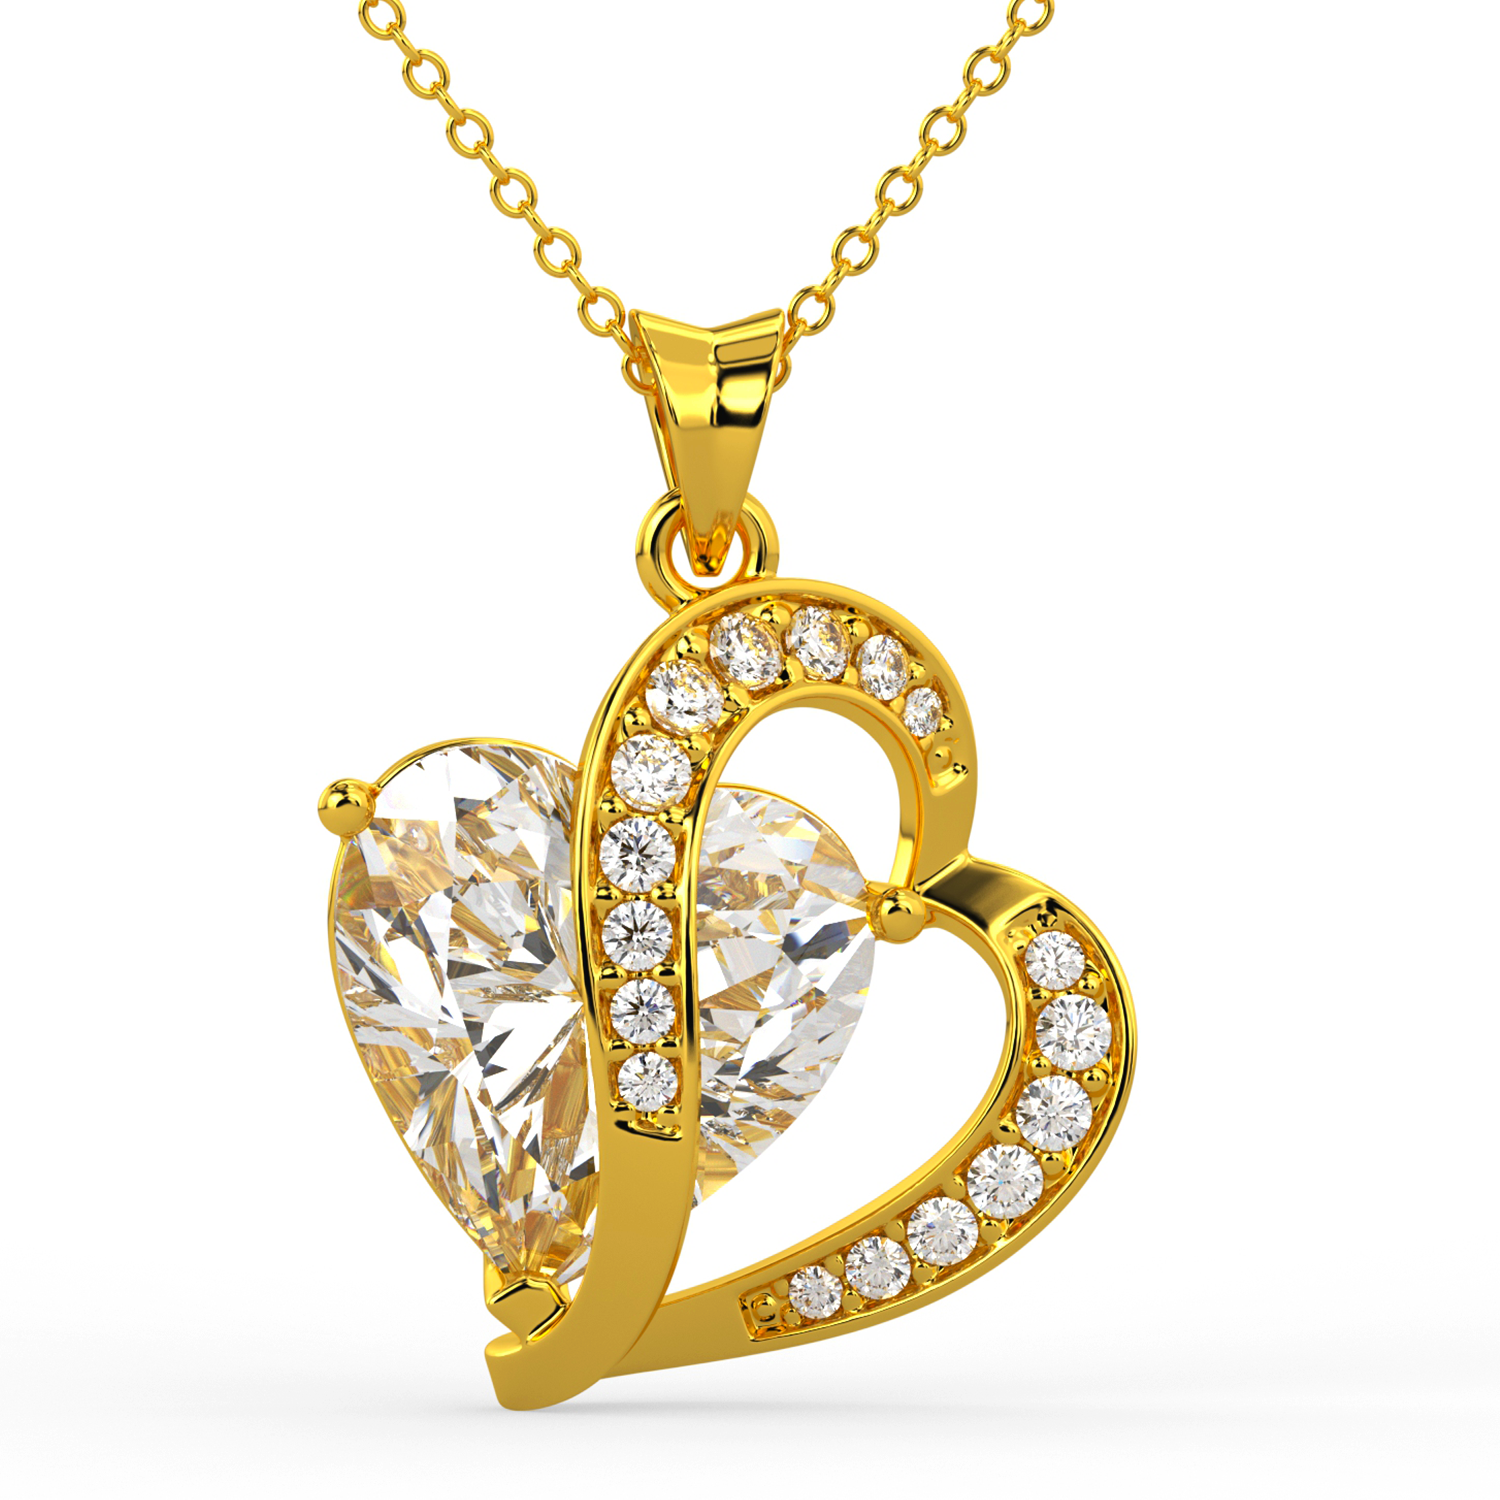 BEEZAL 14KT Real Gold & Diamond Pendant for Women